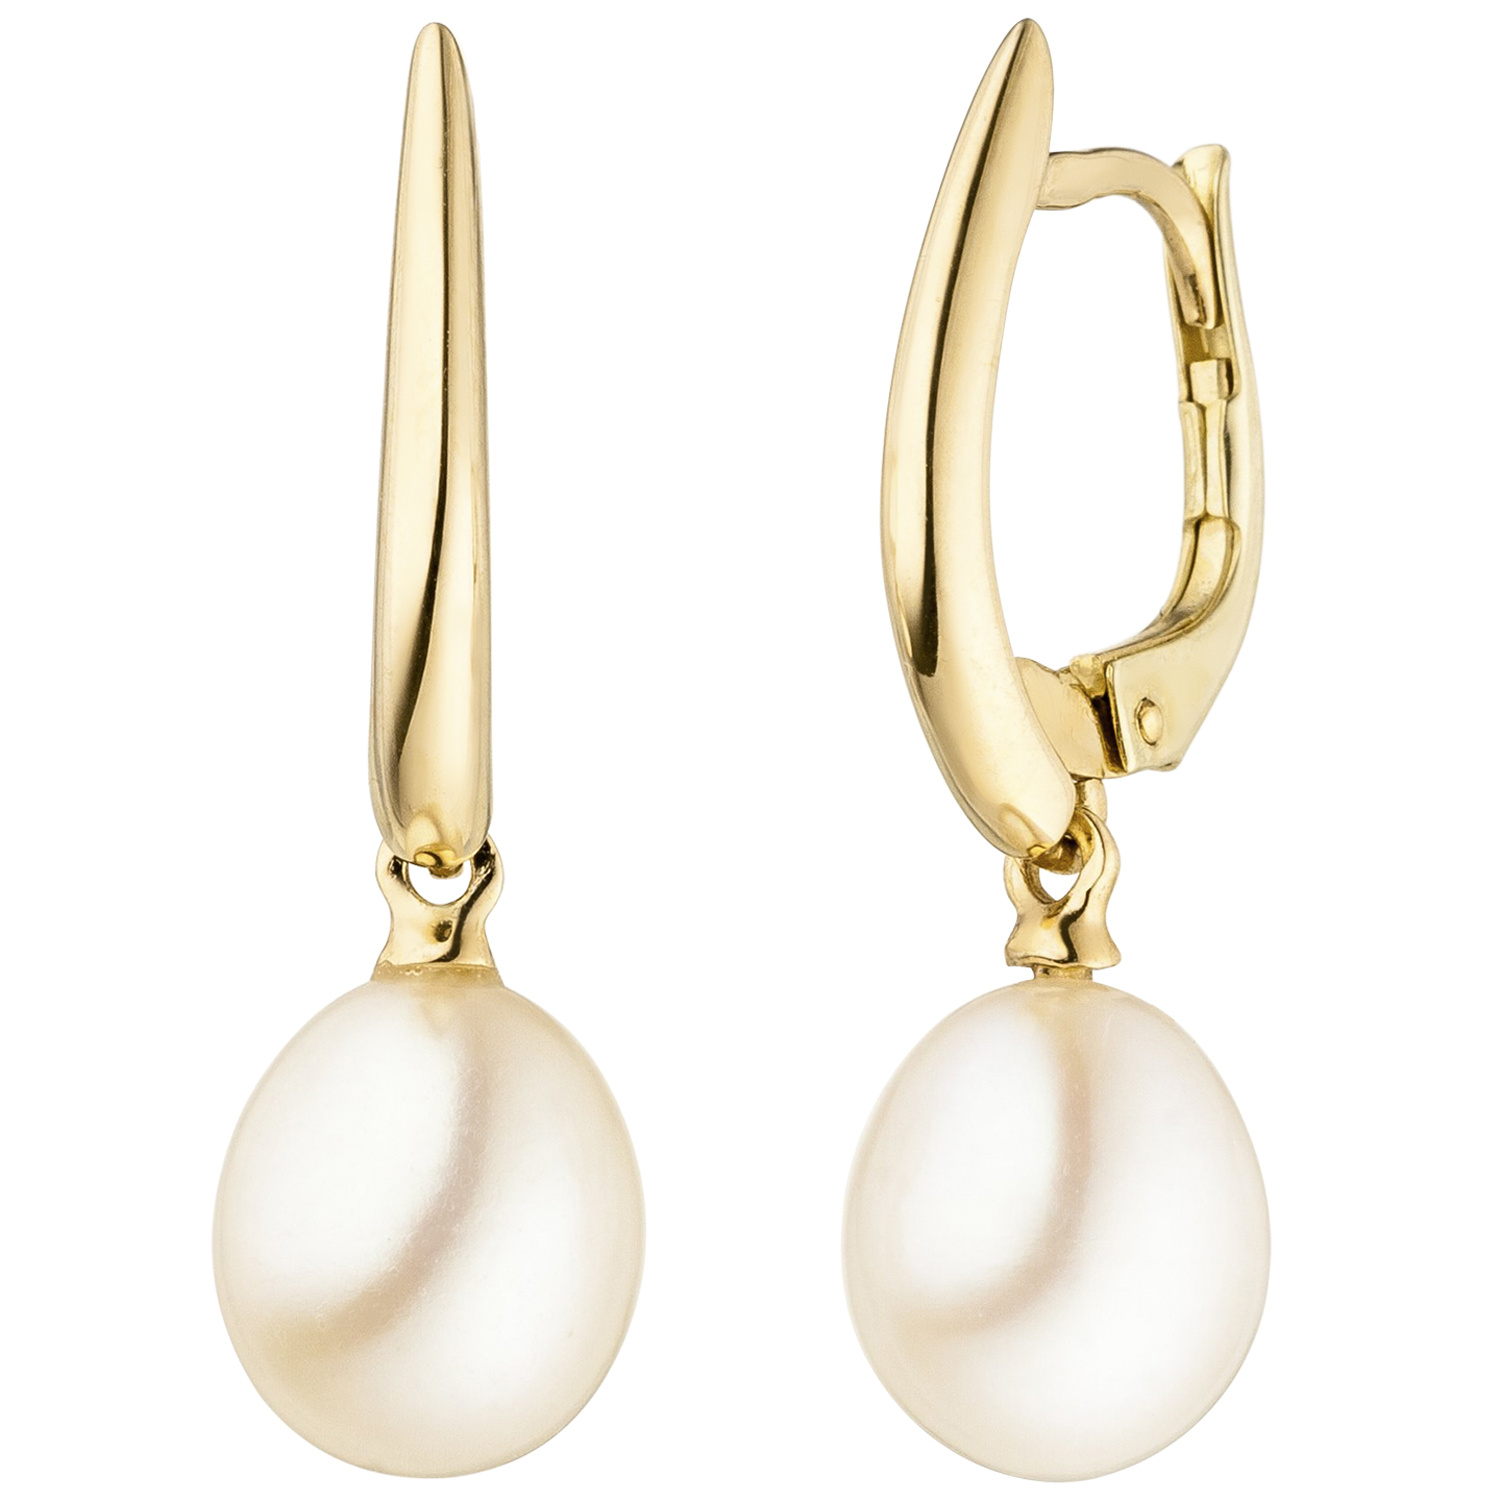 2 Süßwasser Ohrringe Perlen Perlenohrringe Ohrhänger 585 Gelbgold Gold